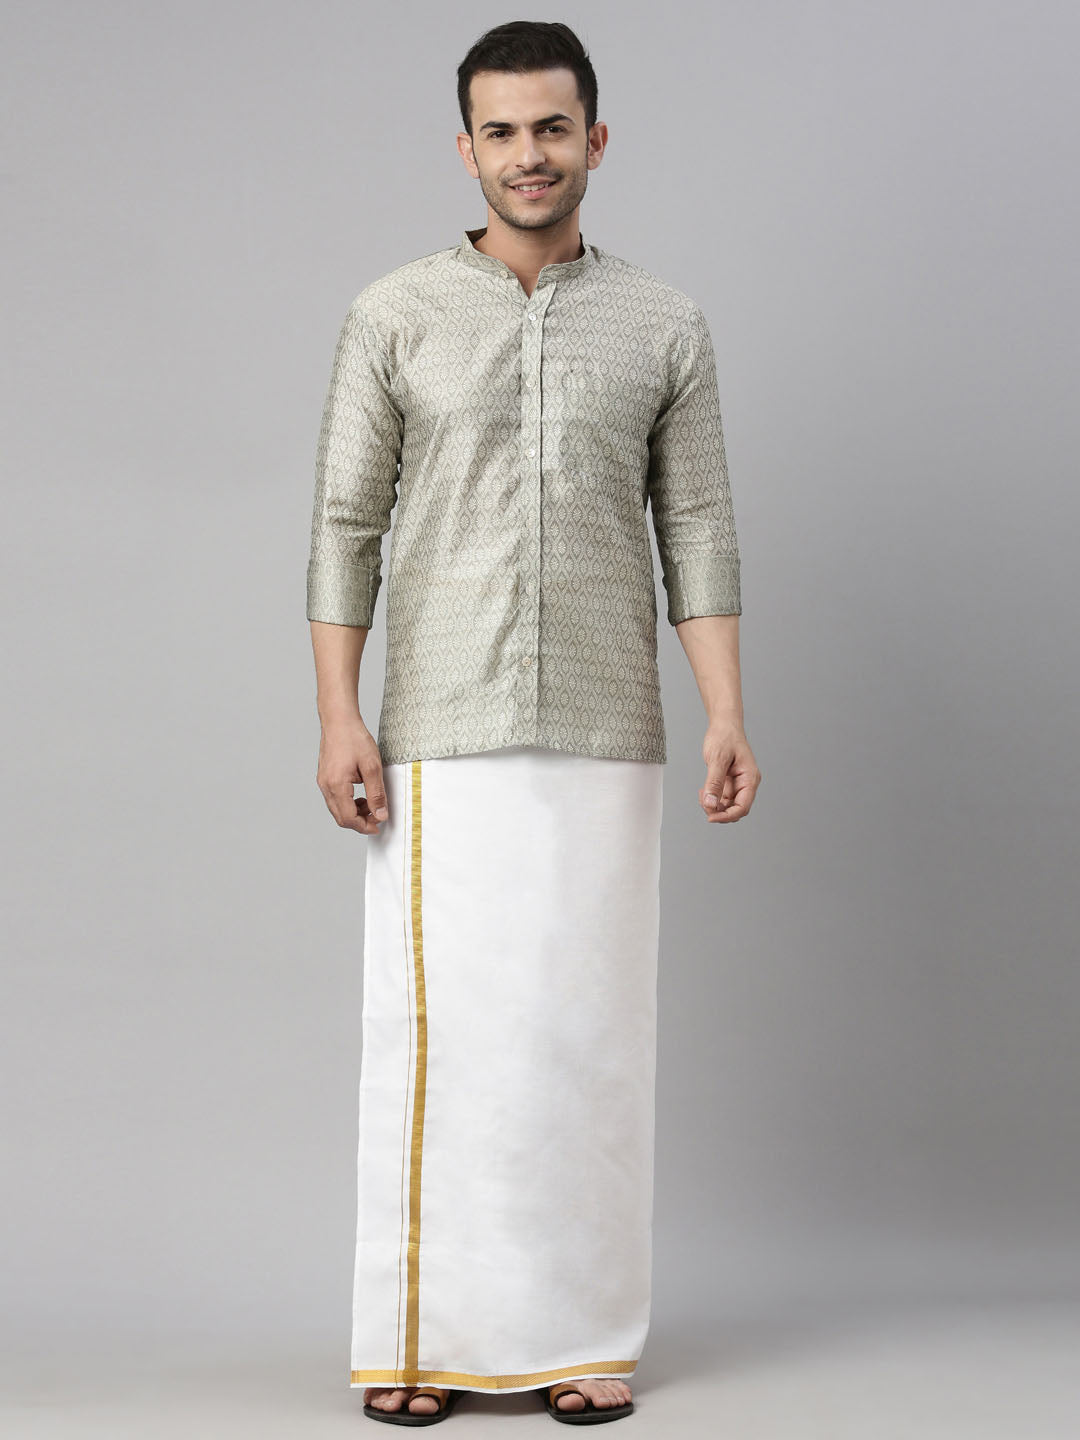 Portrait South Indian Man Stock Photo 2159596169 | Shutterstock